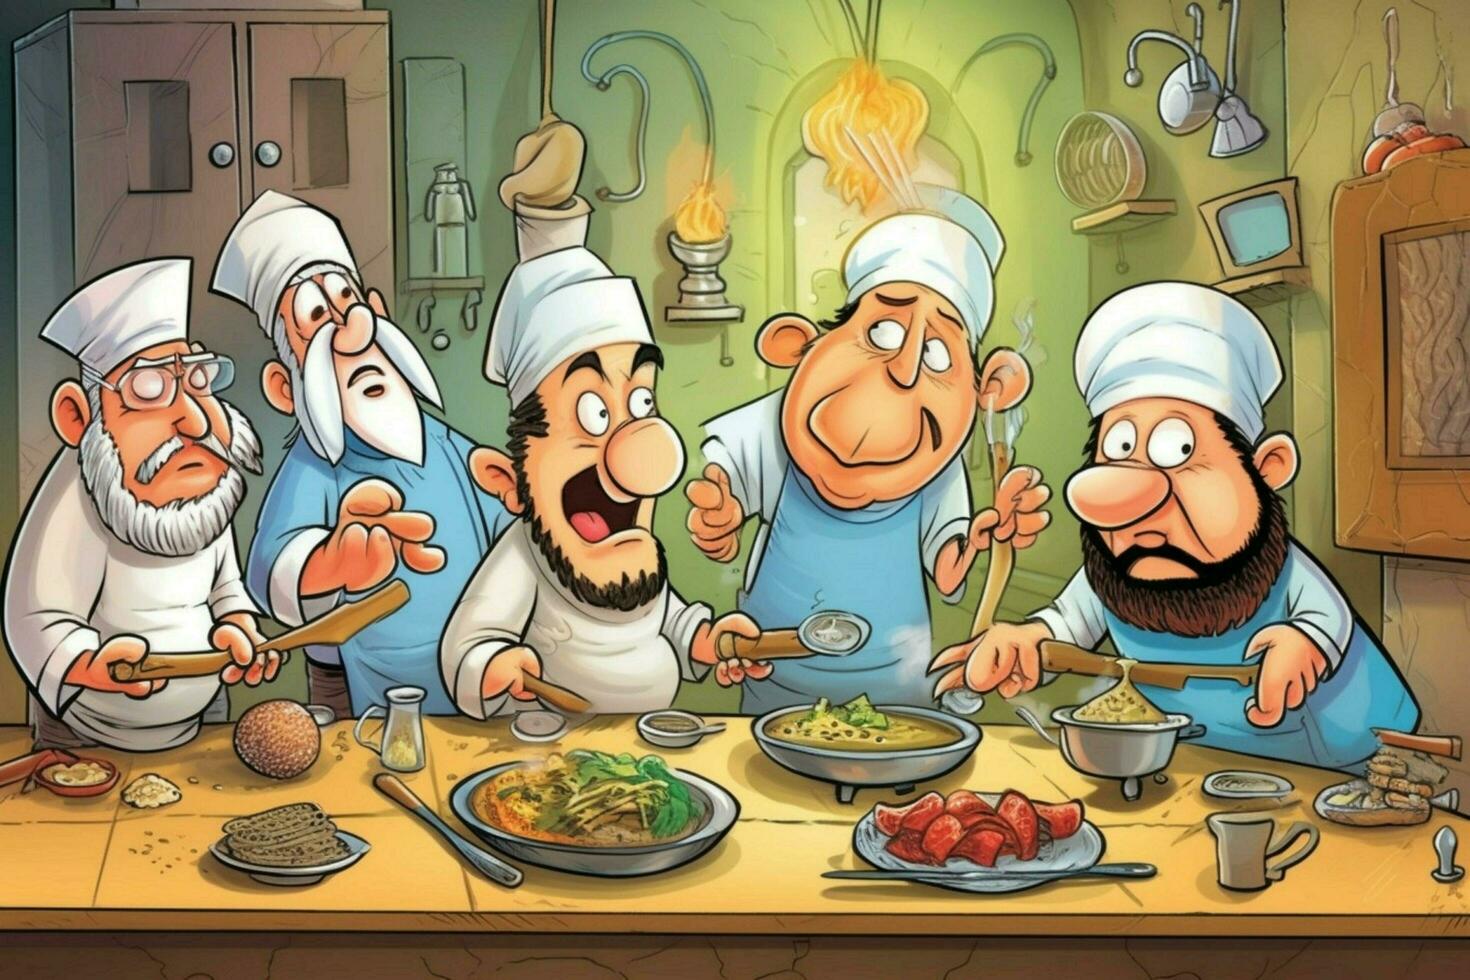 passover cartoons image hd photo